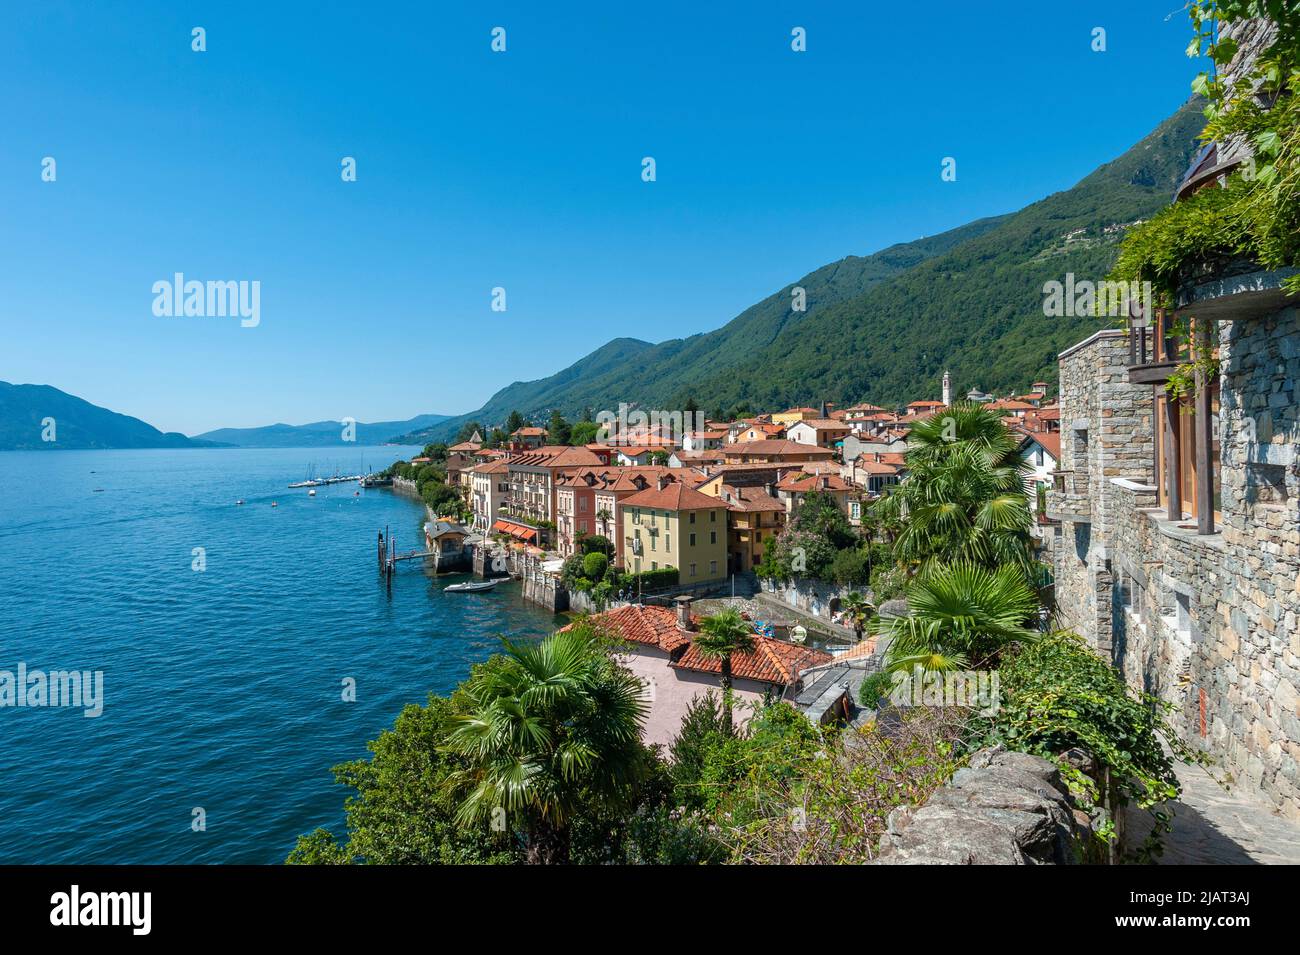 Landscape and cityscape of Cannero Riviera on Lake Maggiore, Piedmont, Italy, Europe Stock Photo